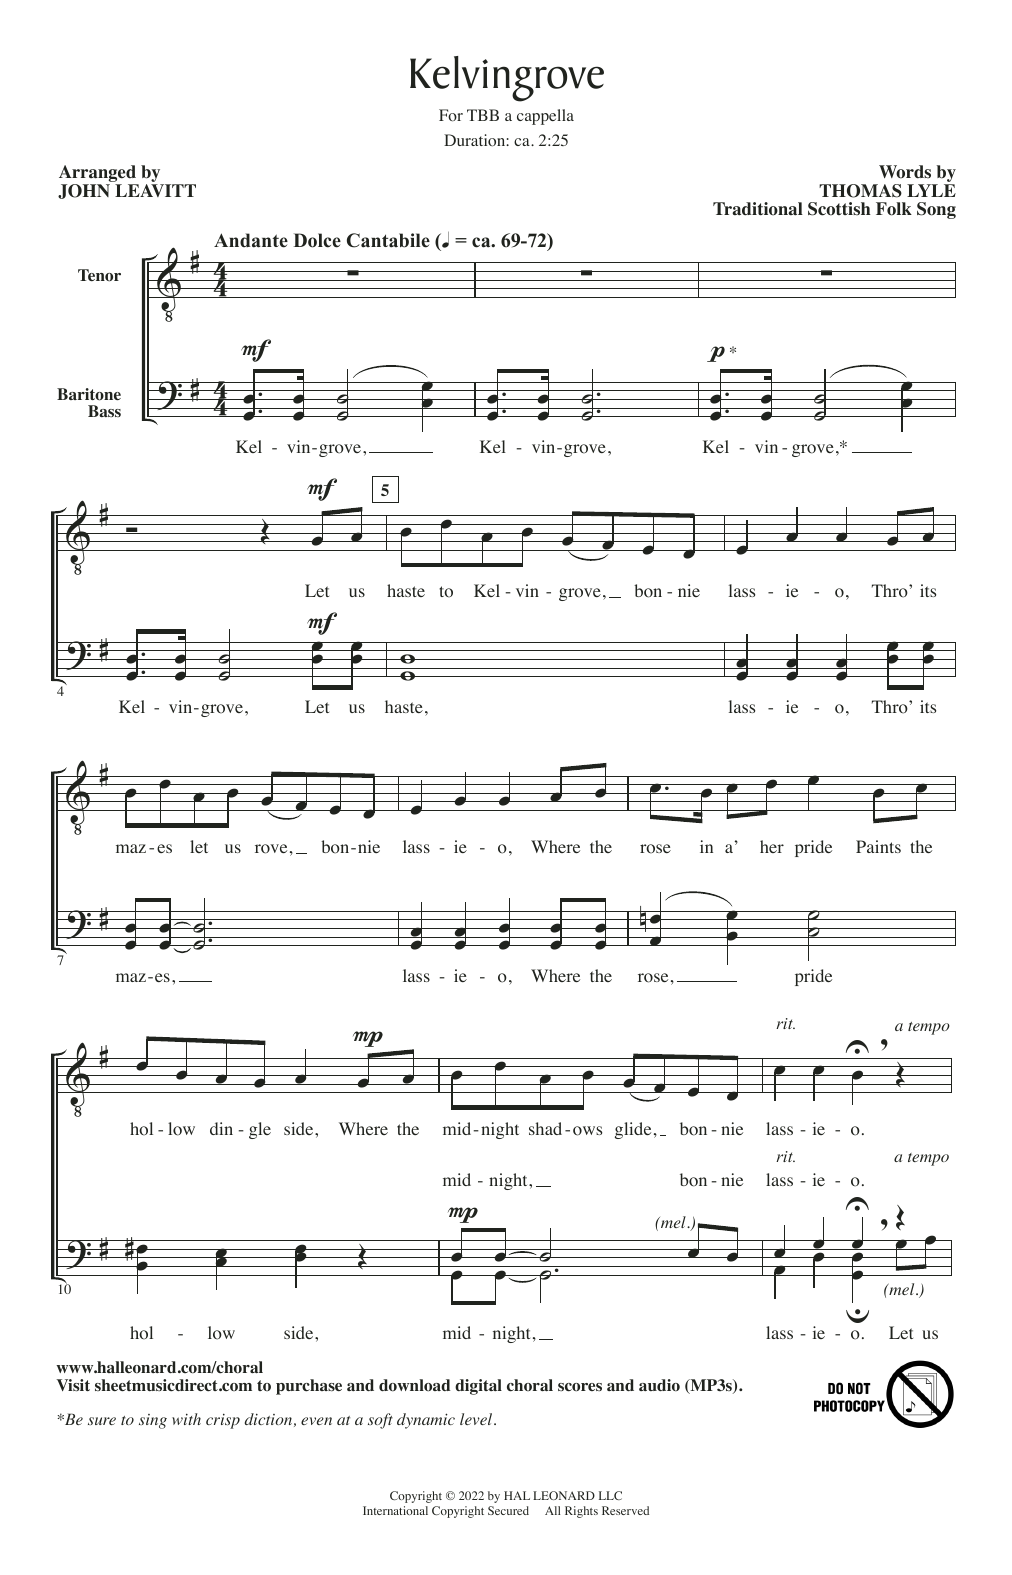 Download Traditional Scottish Folk Song Kelvingrove (arr. John Leavitt) Sheet Music and learn how to play TBB Choir PDF digital score in minutes